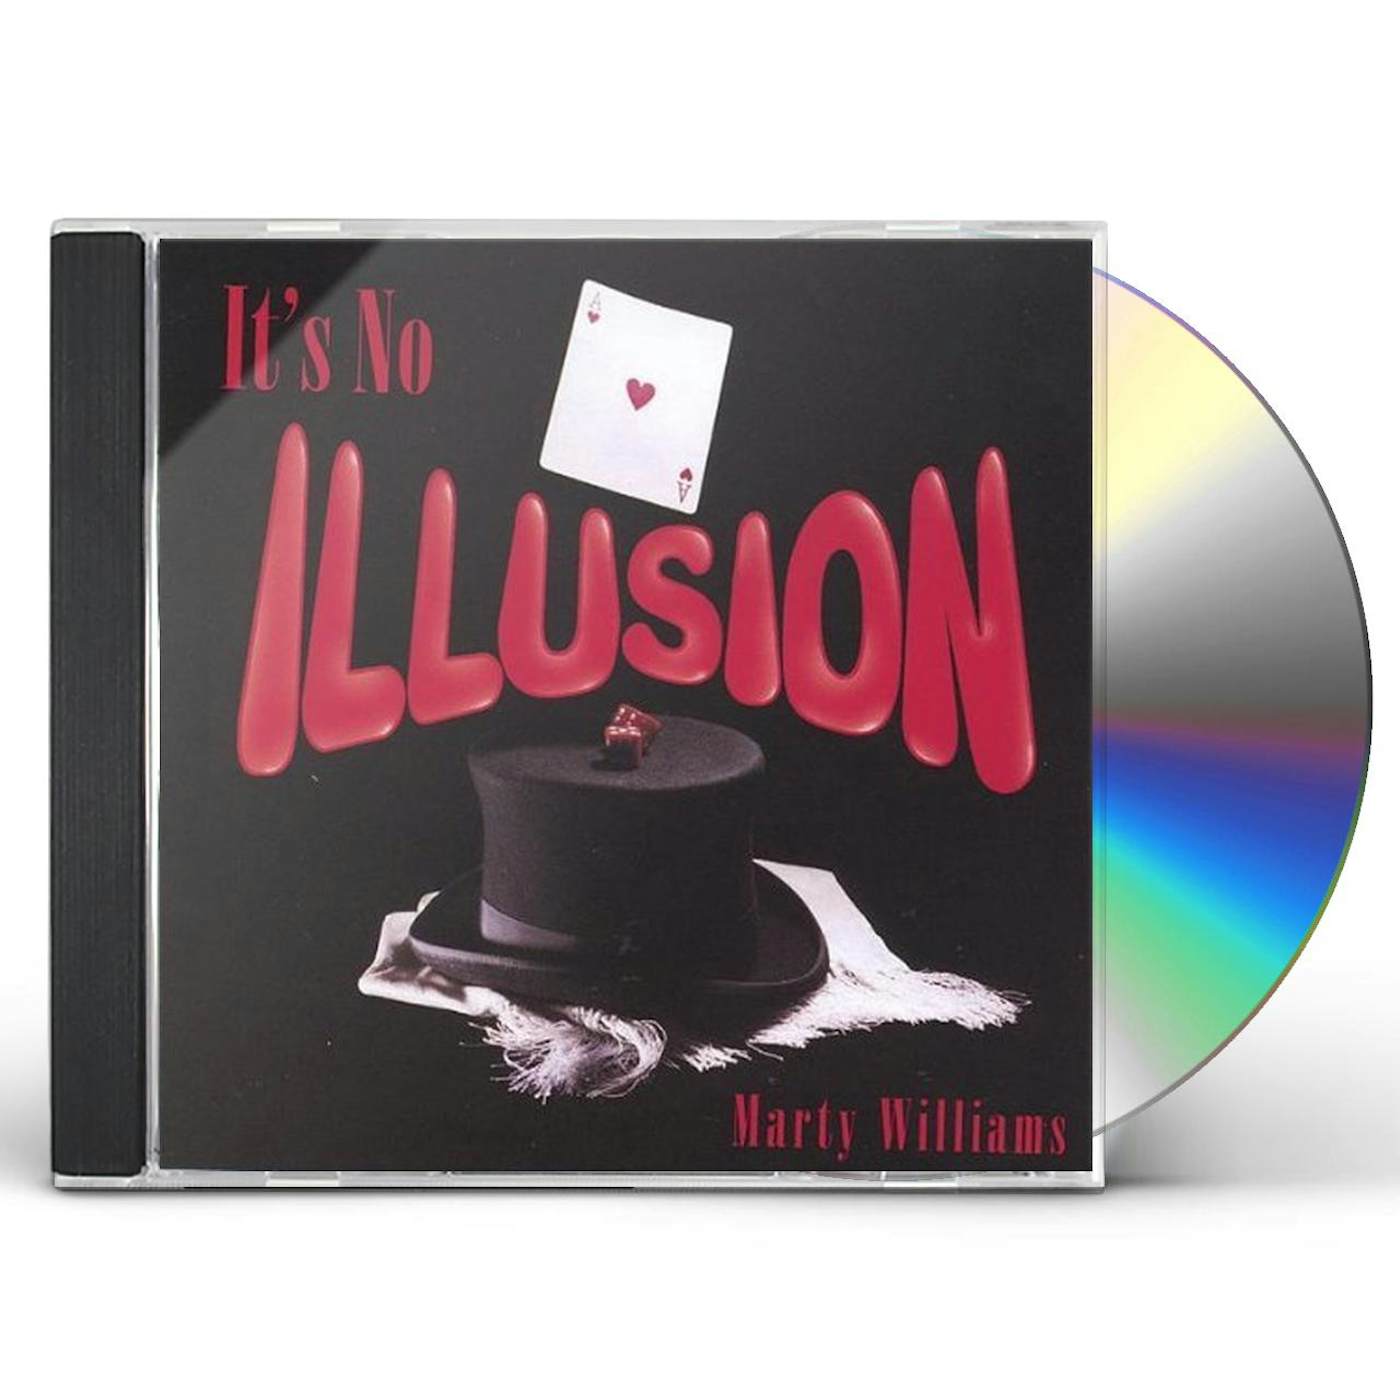 Marty Williams ITS NO ILLUSION CD